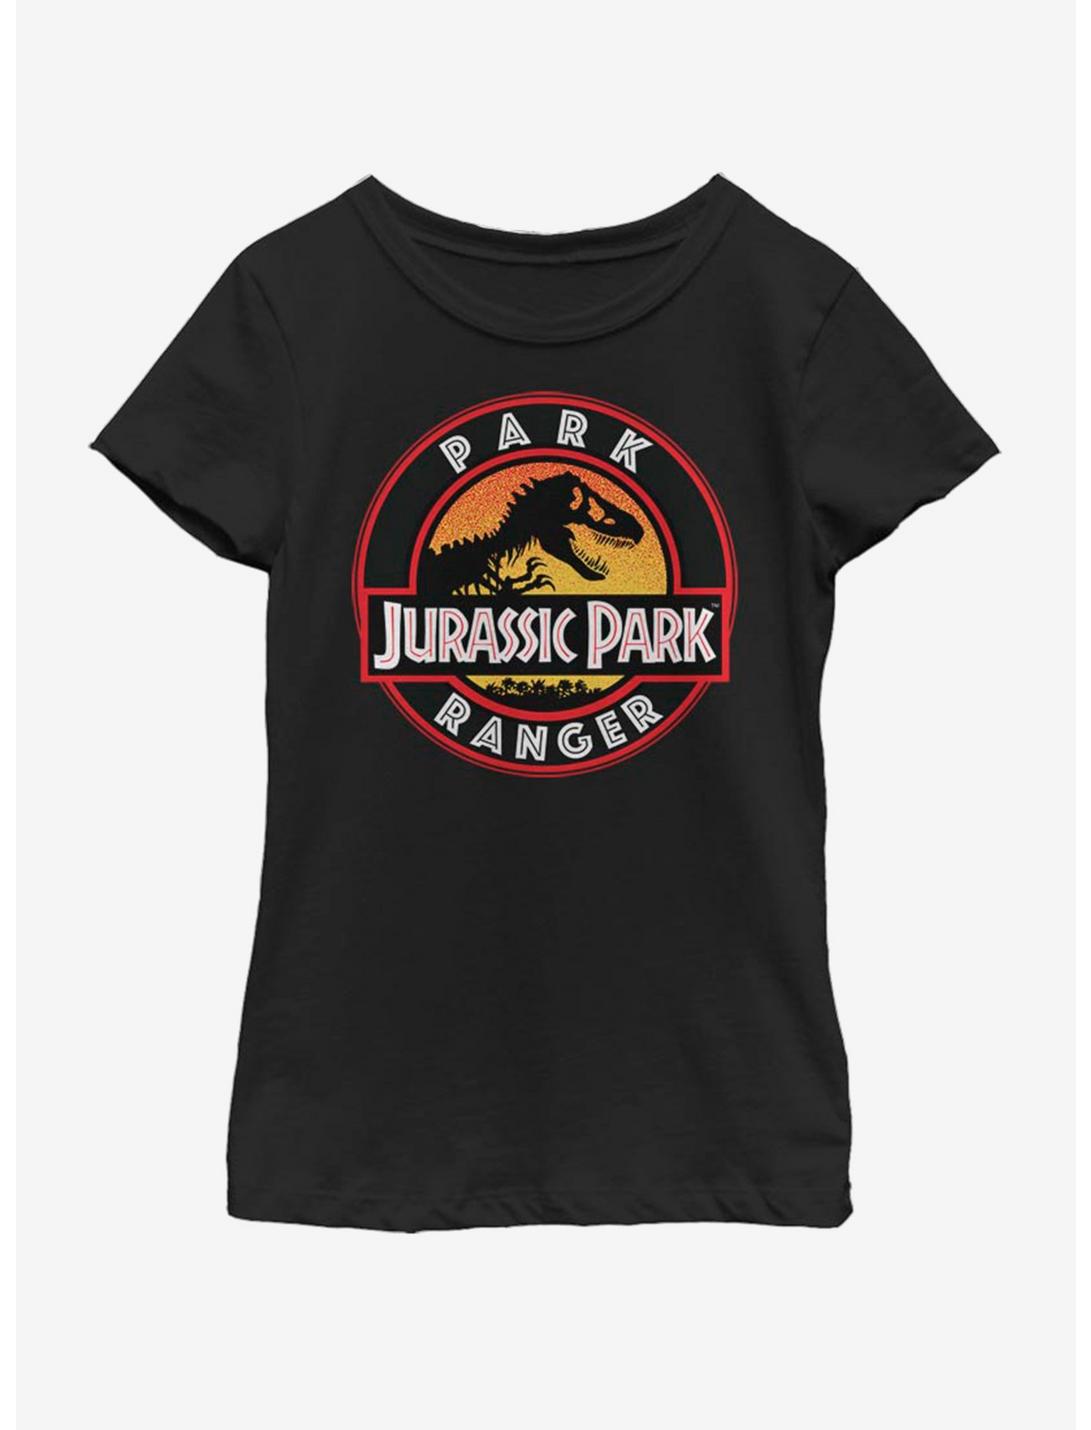 Jurassic Park JP Ranger Youth Girls T-Shirt, BLACK, hi-res